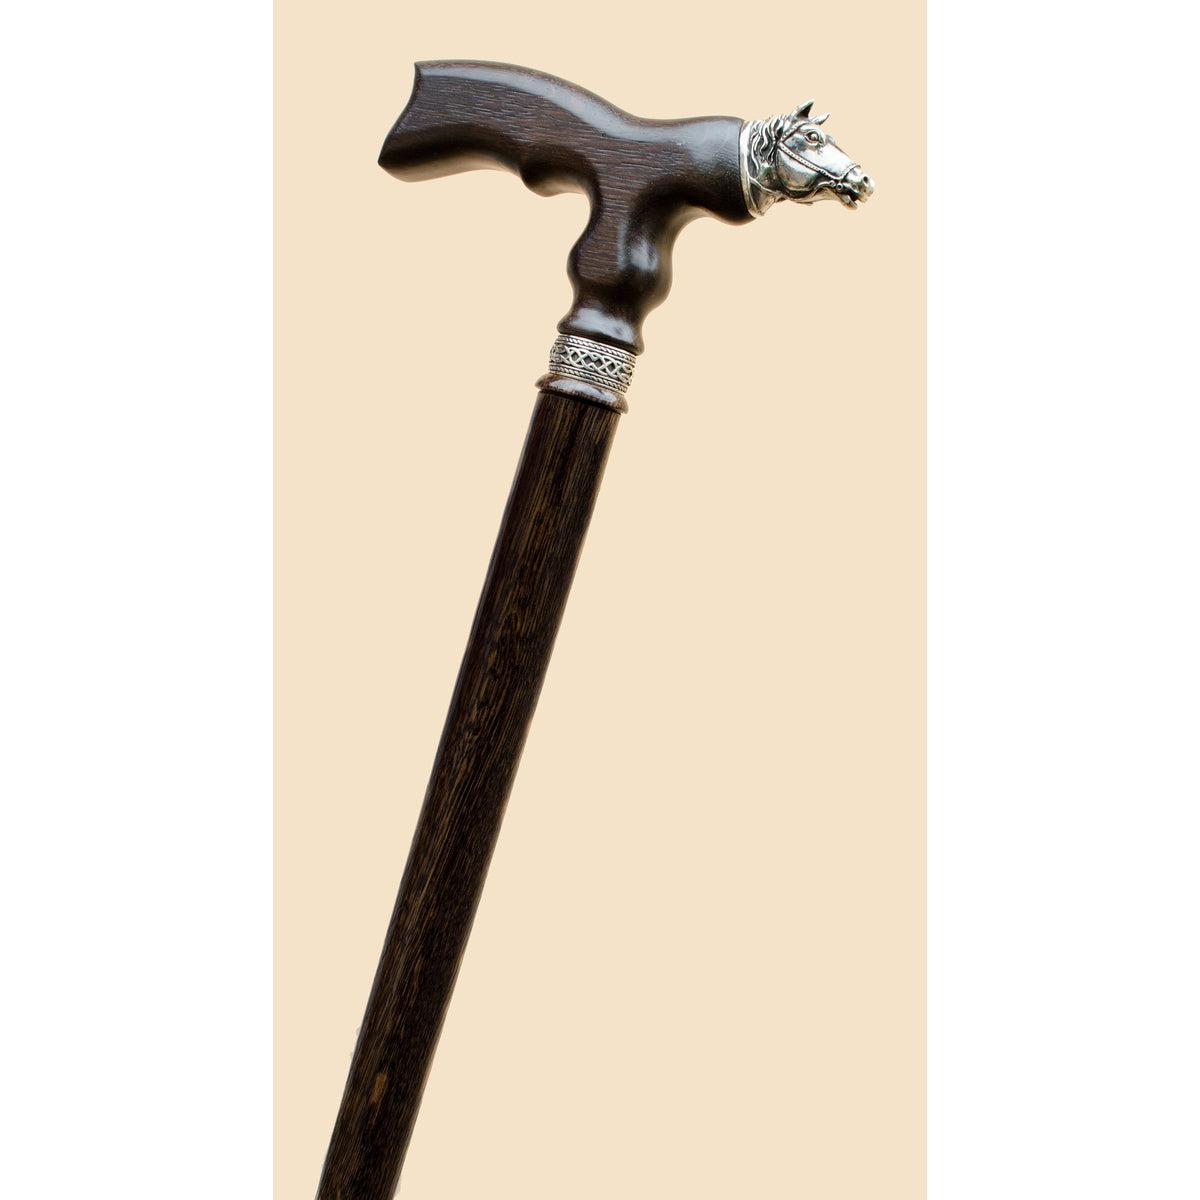 Unique Custom Wooden Horse Cane or Walking Stick